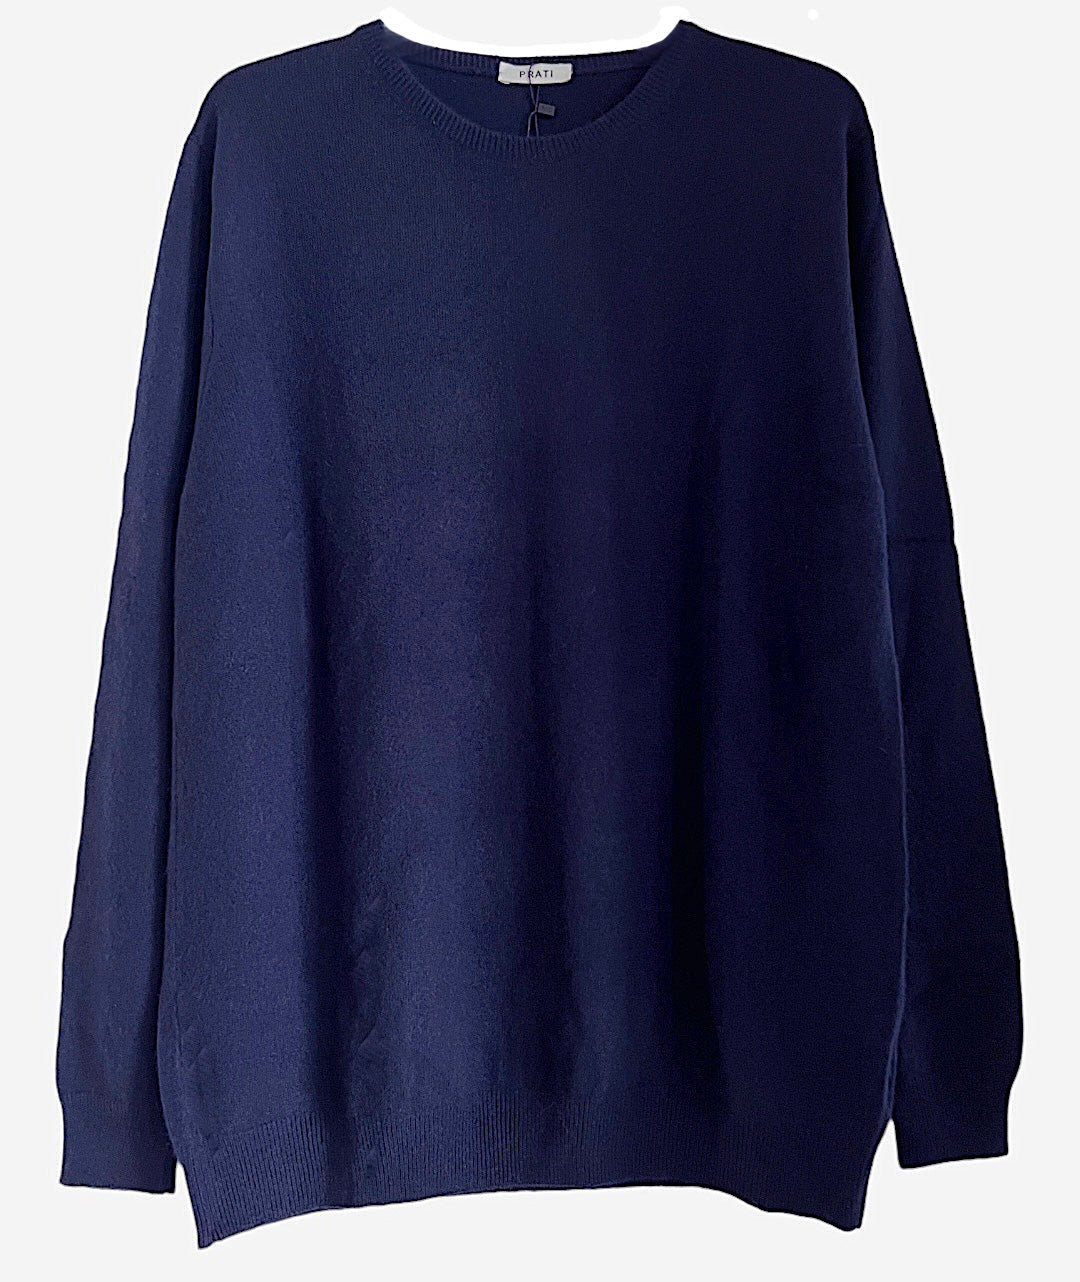 Men´s cashmere crew neck sweater jeans blue